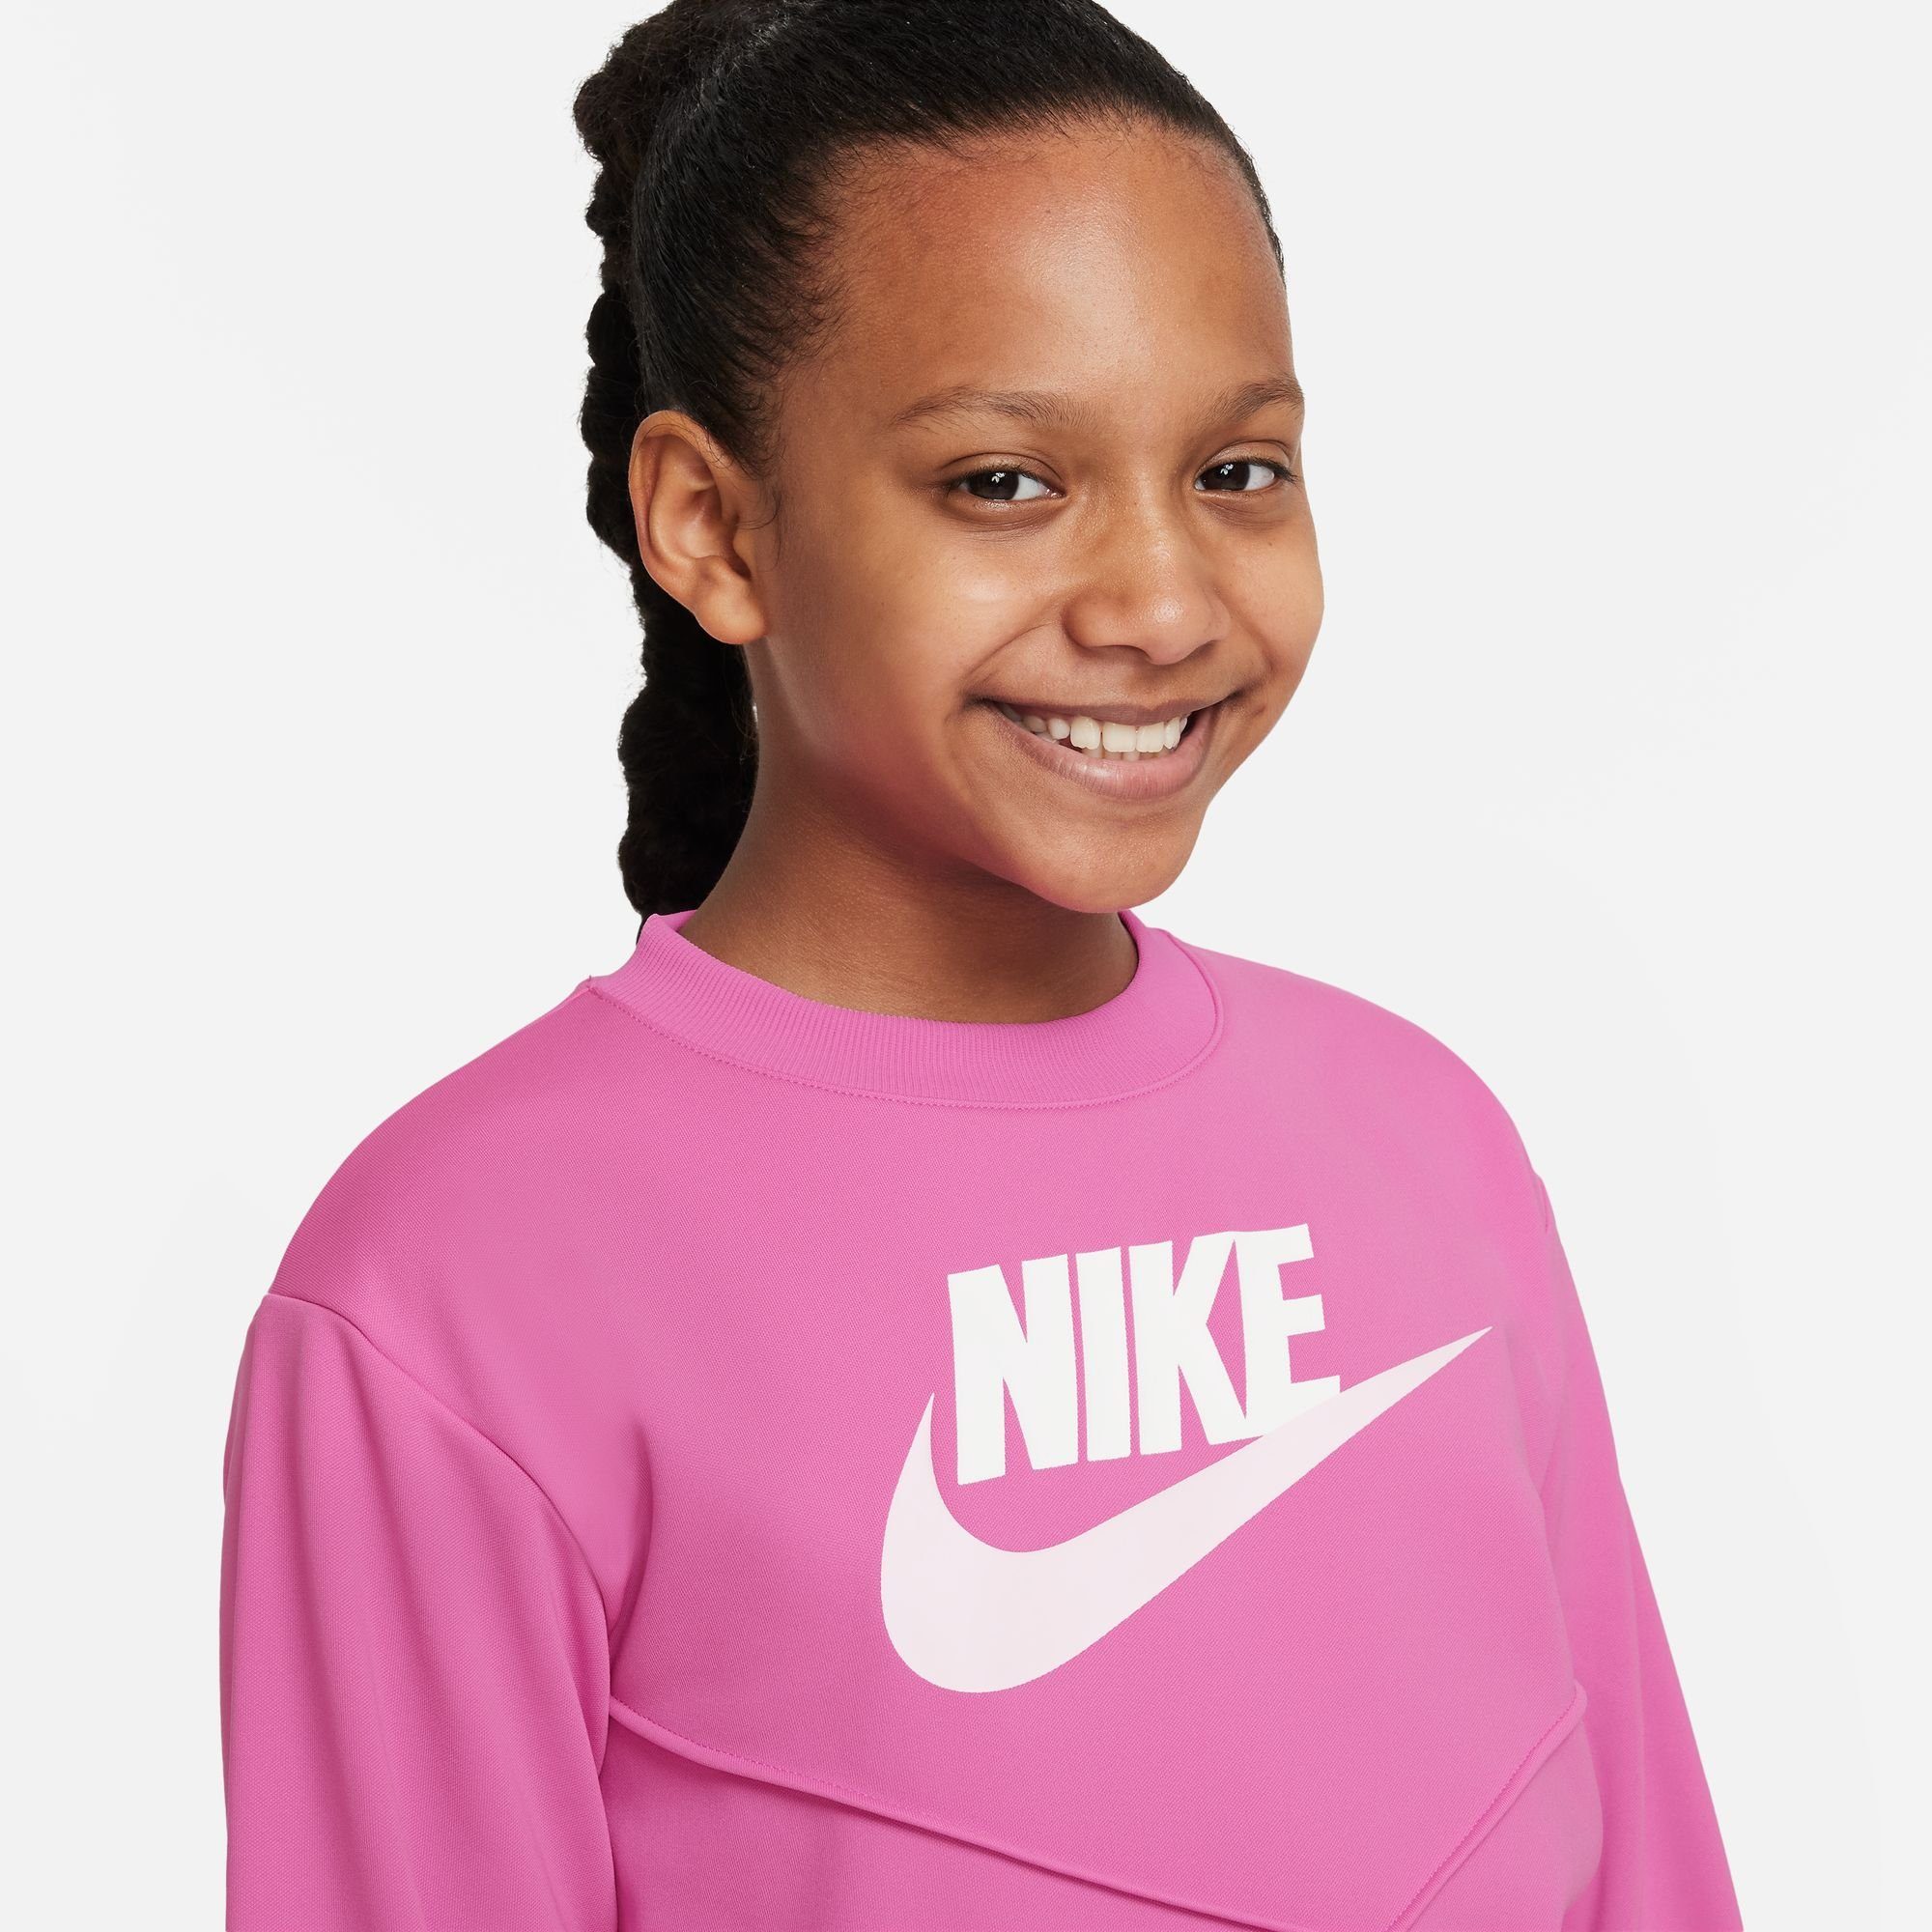 PINK/WHITE/WHITE TRACKSUIT Trainingsanzug PLAYFUL KIDS' BIG Nike Sportswear